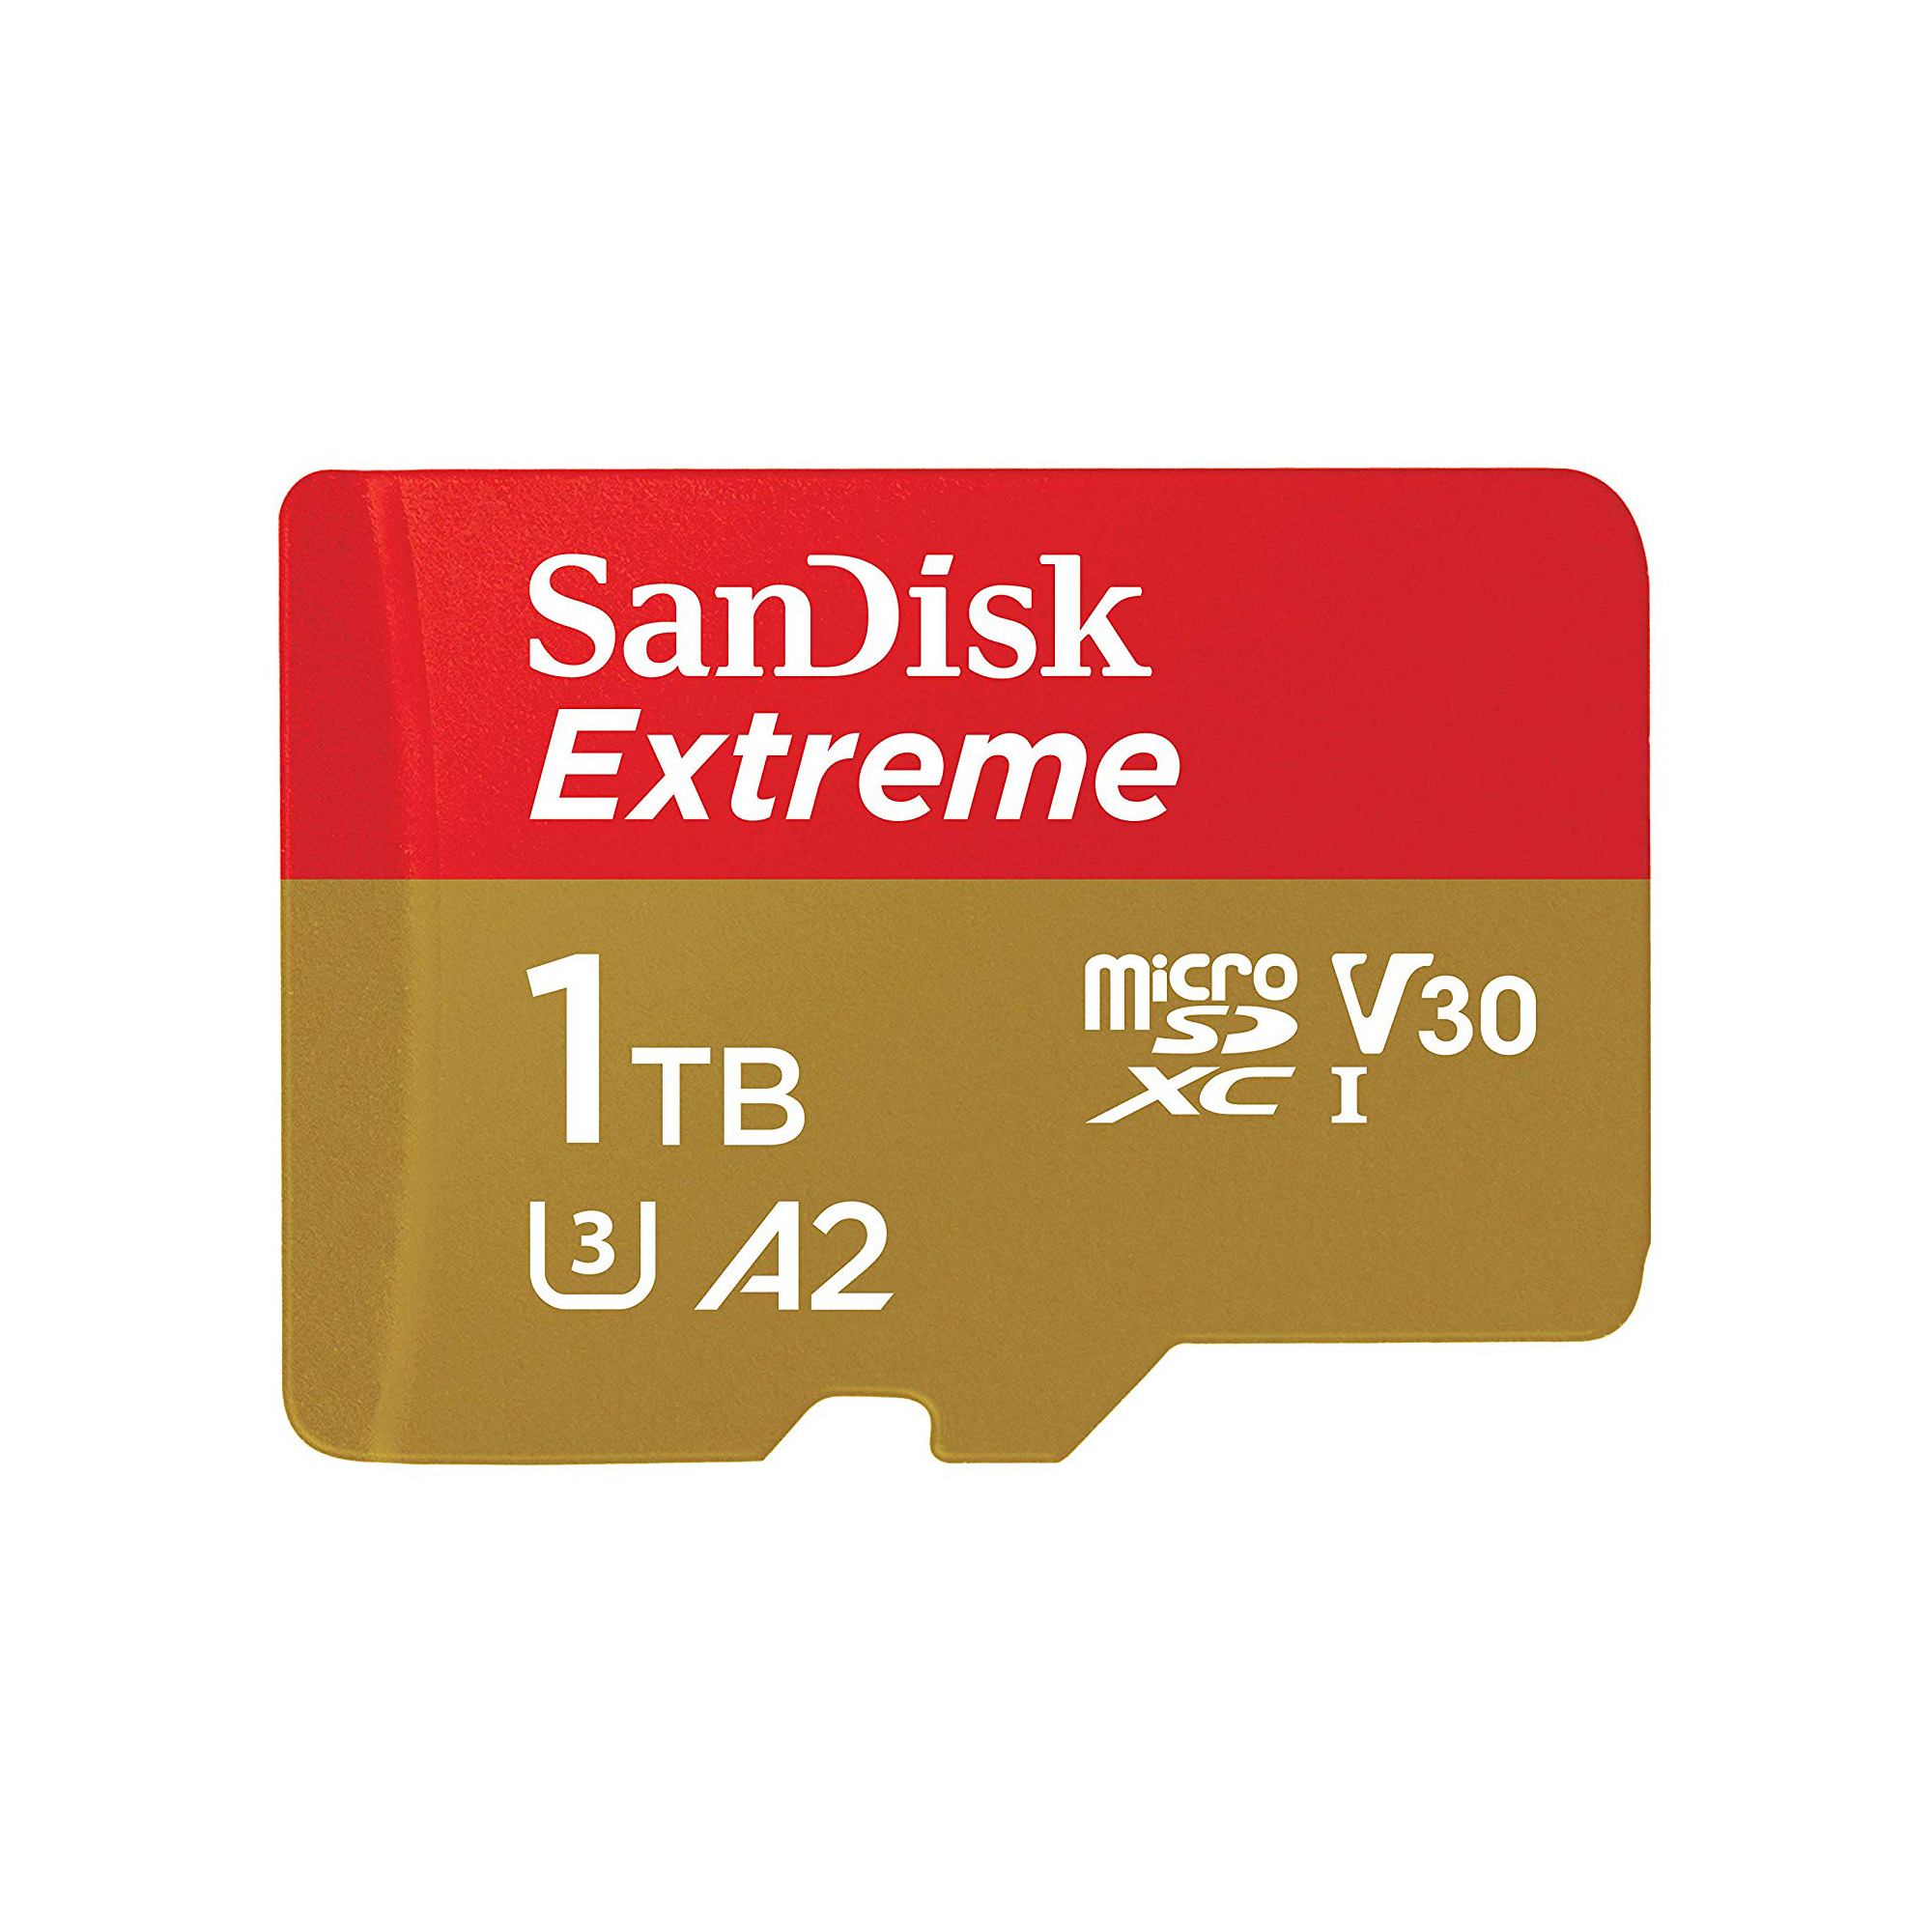 SanDisk Extreme microSD UHS-I Card 1TB